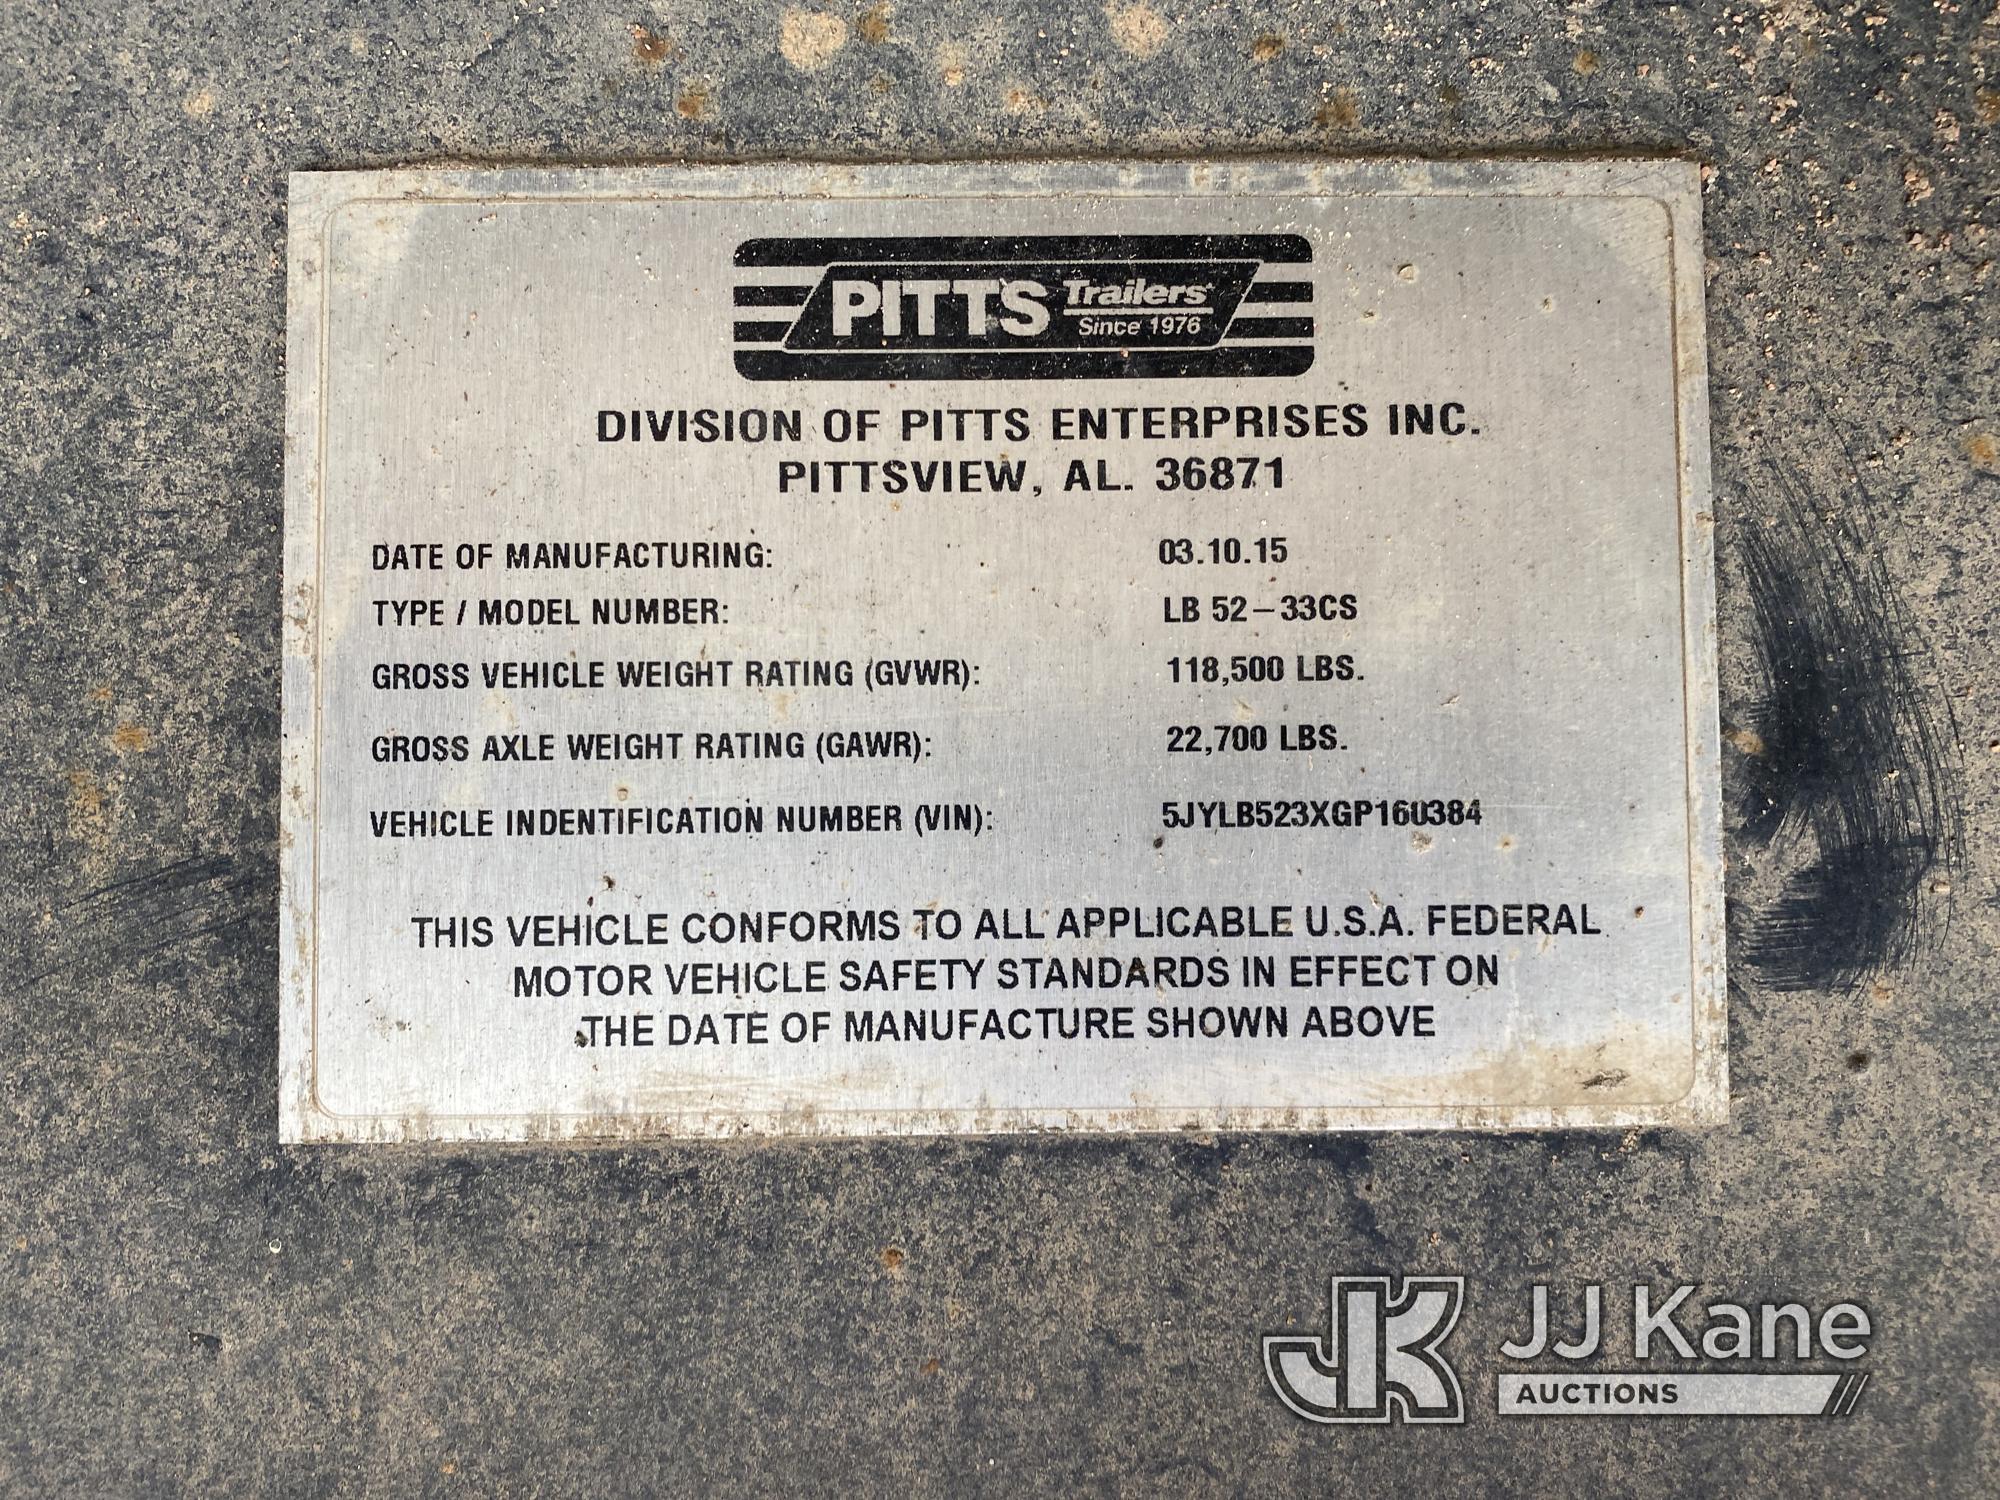 (Plymouth Meeting, PA) 2016 Pitts LB52-33CS Drop Deck Semi Trailer Body & Rust Damage, Missing Foot